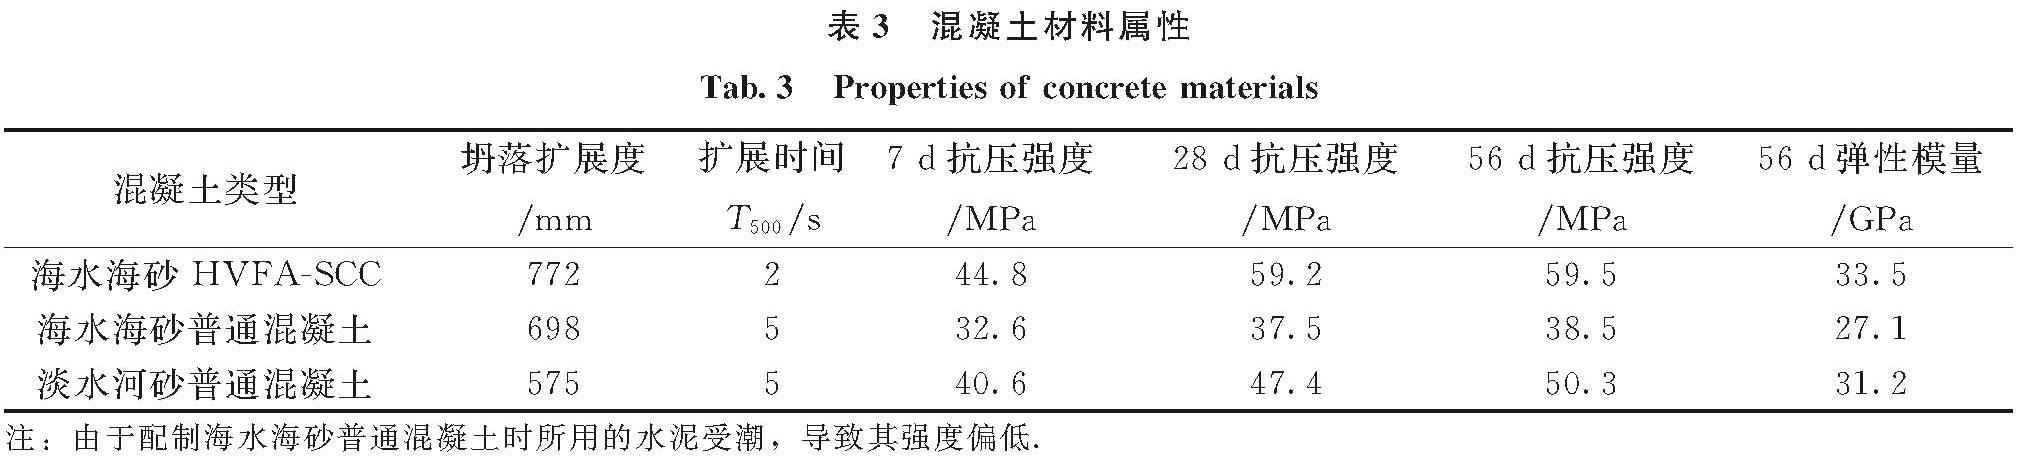 表3 混凝土材料属性<br/>Tab.3 Properties of concrete materials